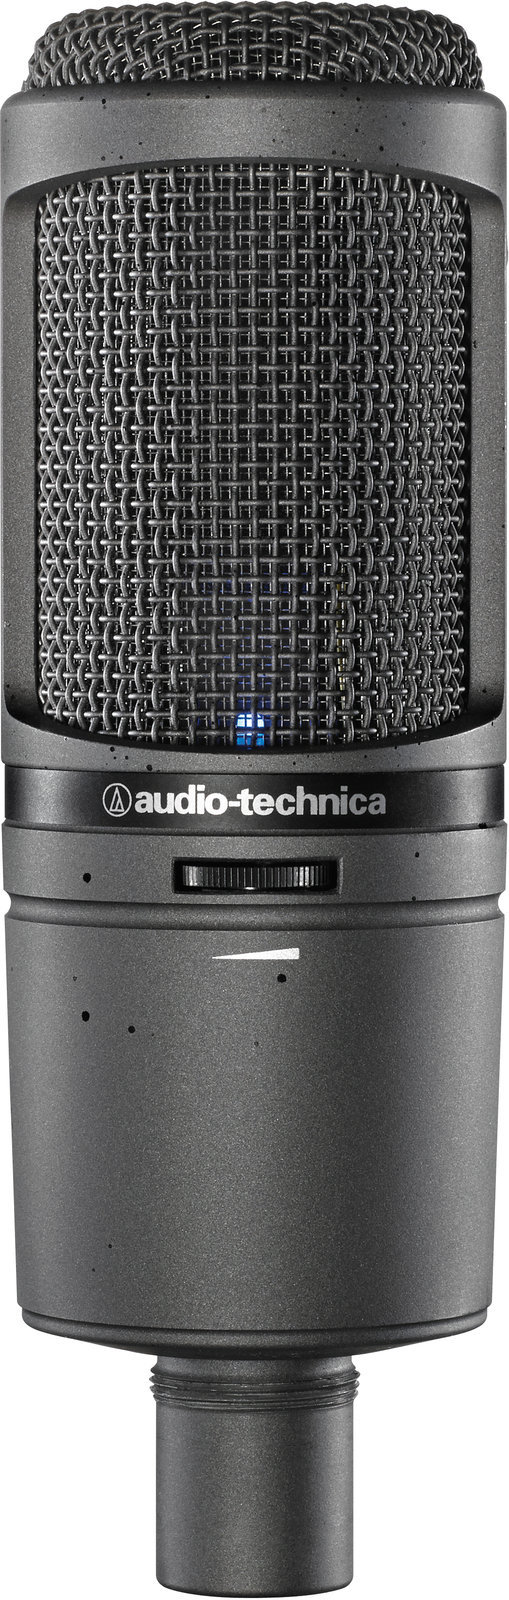 Microphone USB Audio-Technica AT2020USBi